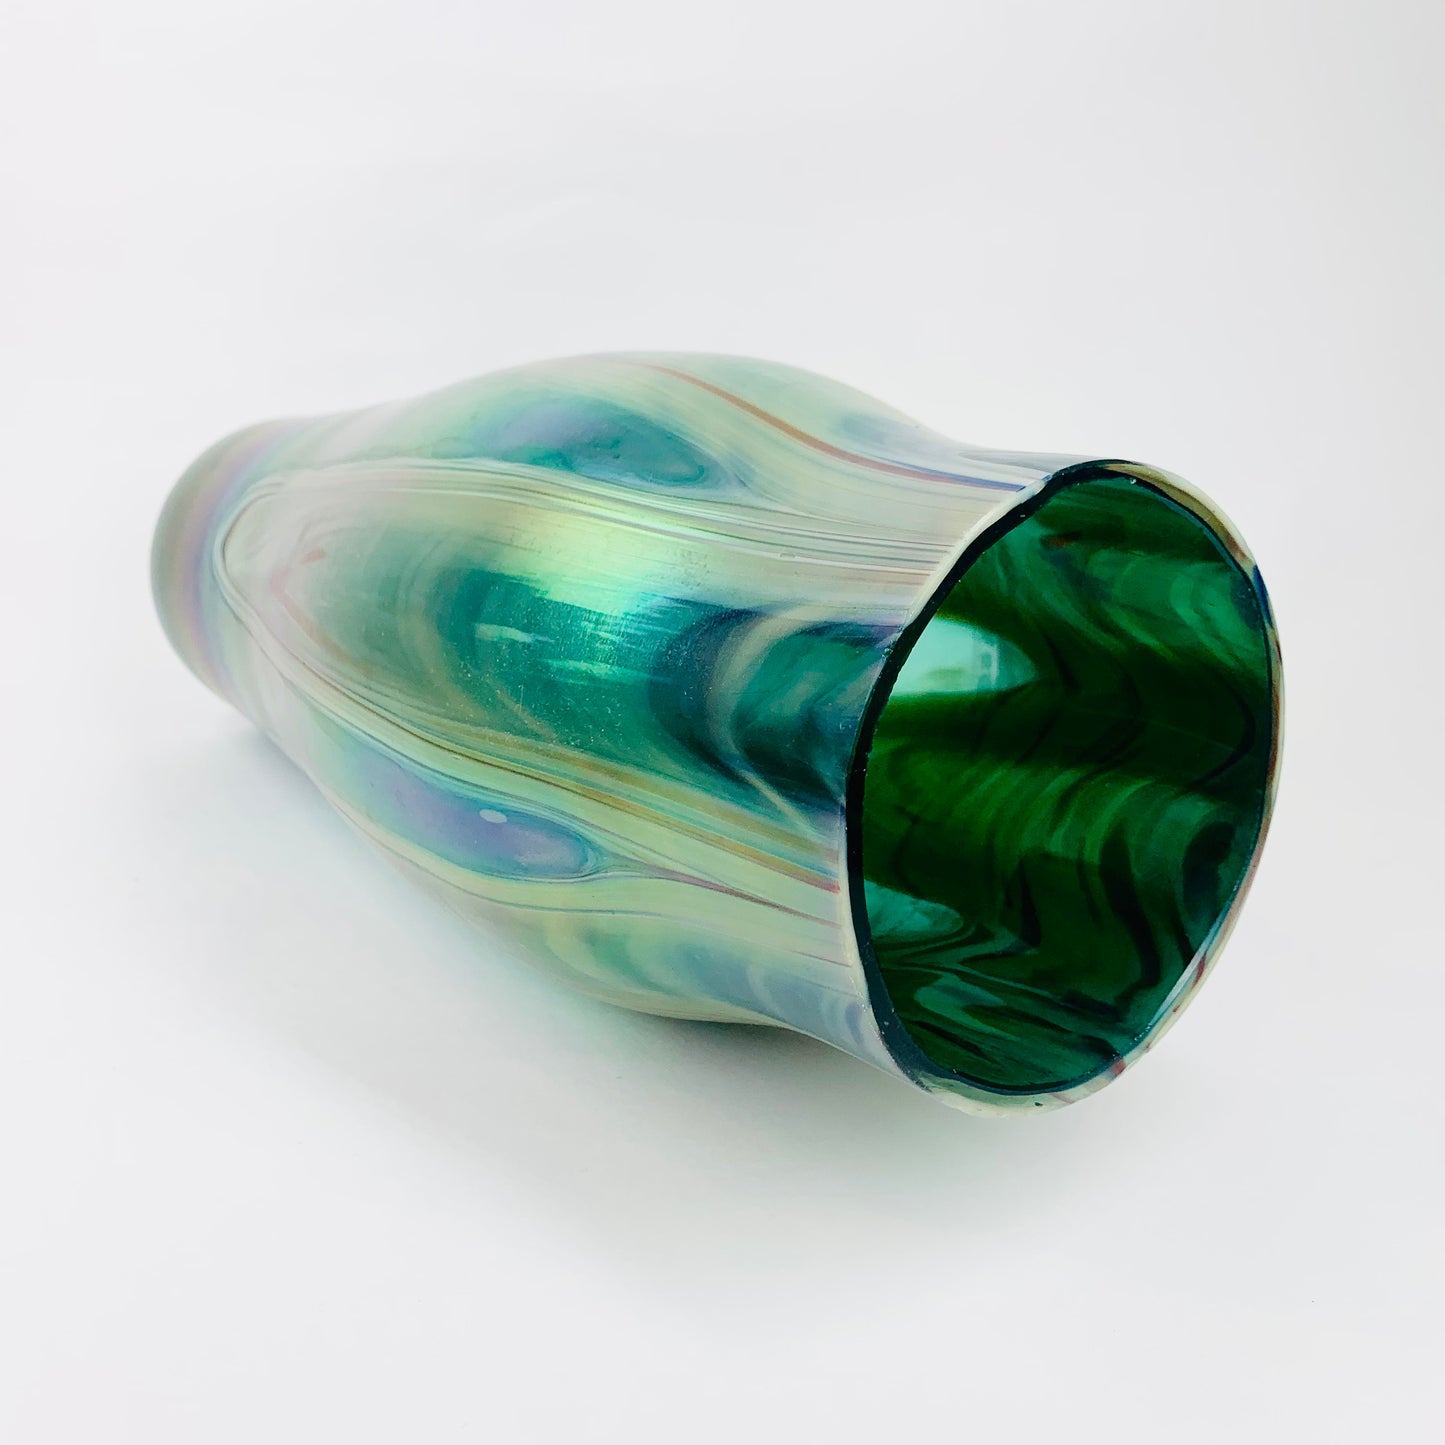 Antique Art Nouveau Kralik hand made peacock iridescent feather glass vase